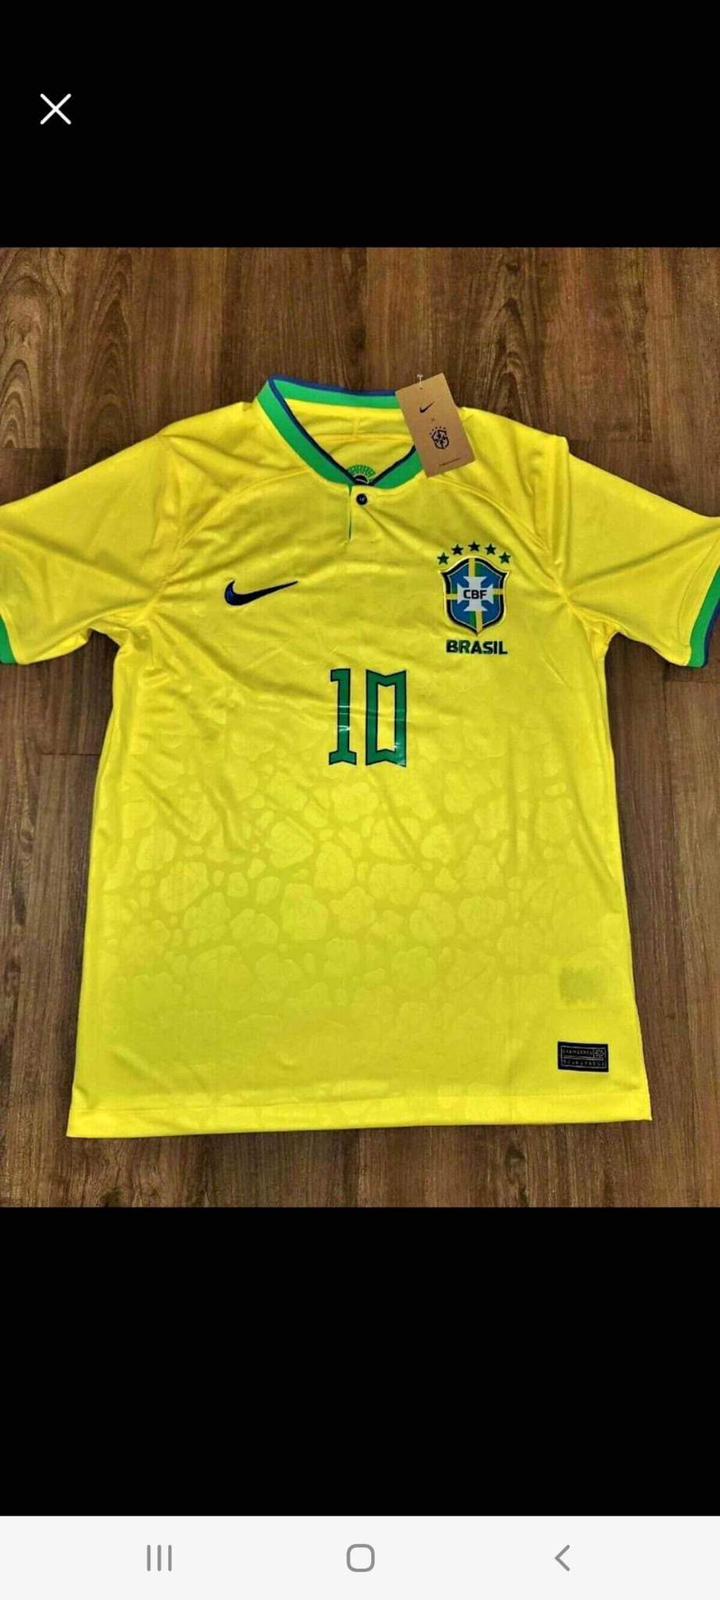 Wholesale 2022 Qatar World Cup national team Argentina Messi France Brazil jersey single top soccer uniform